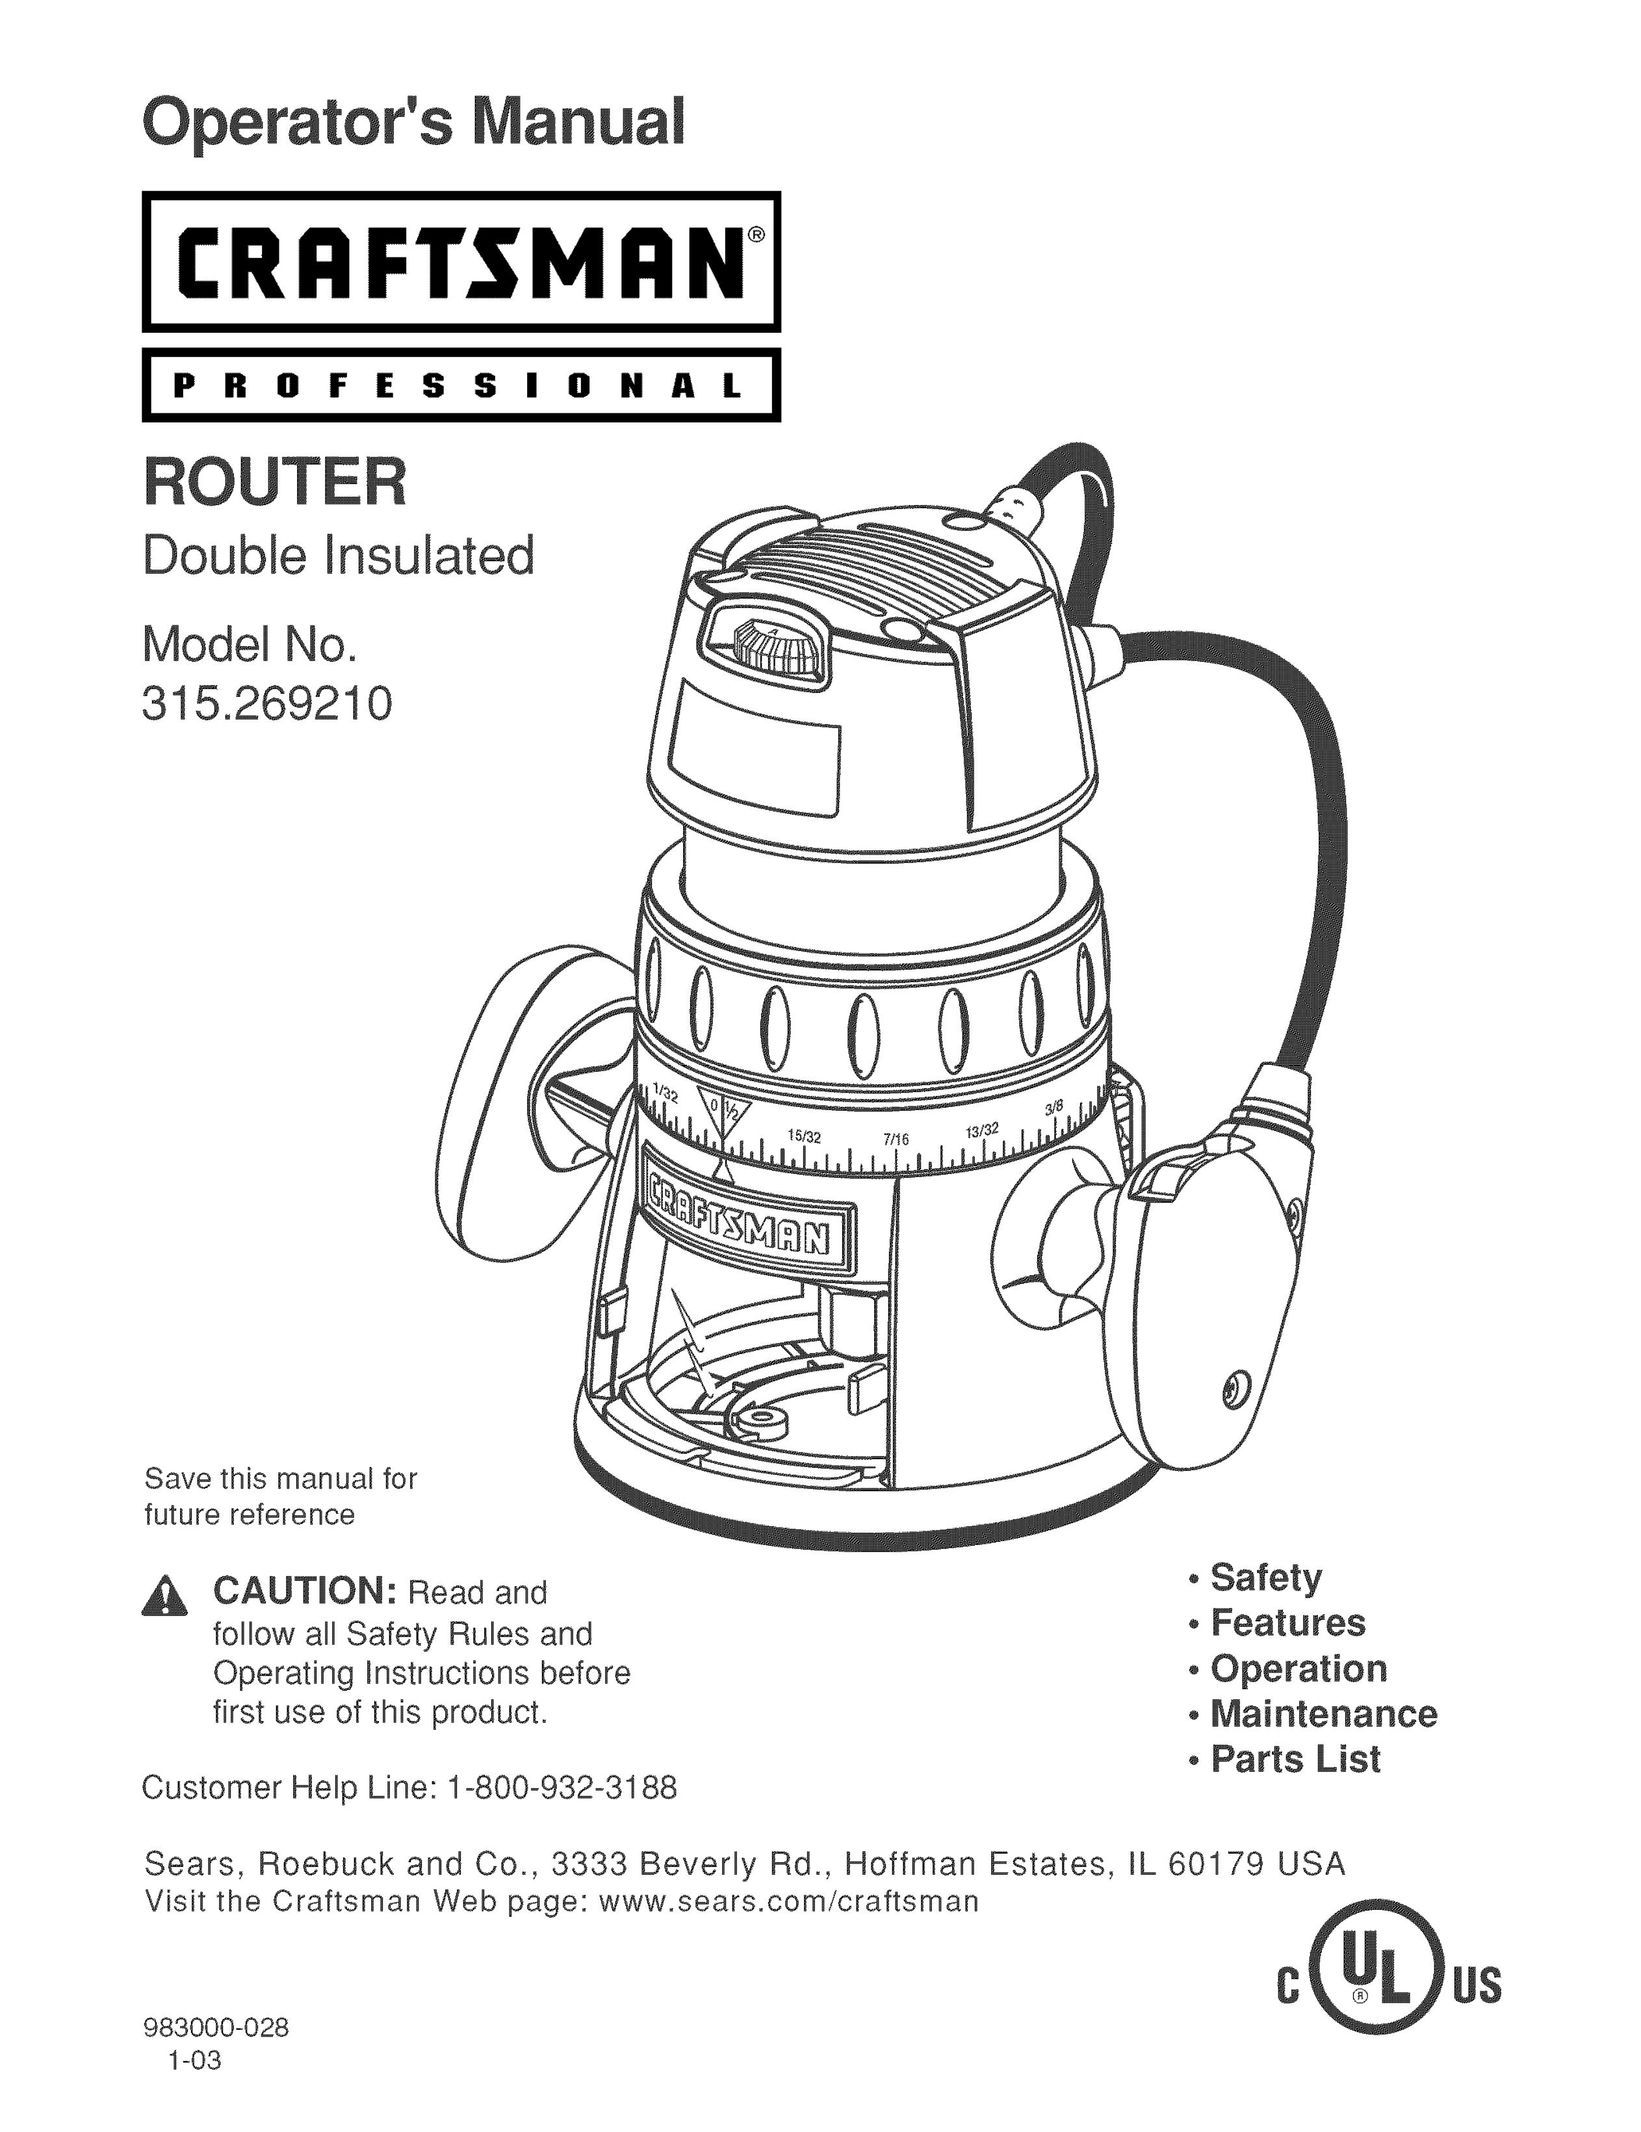 Craftsman 315.26921 Router User Manual